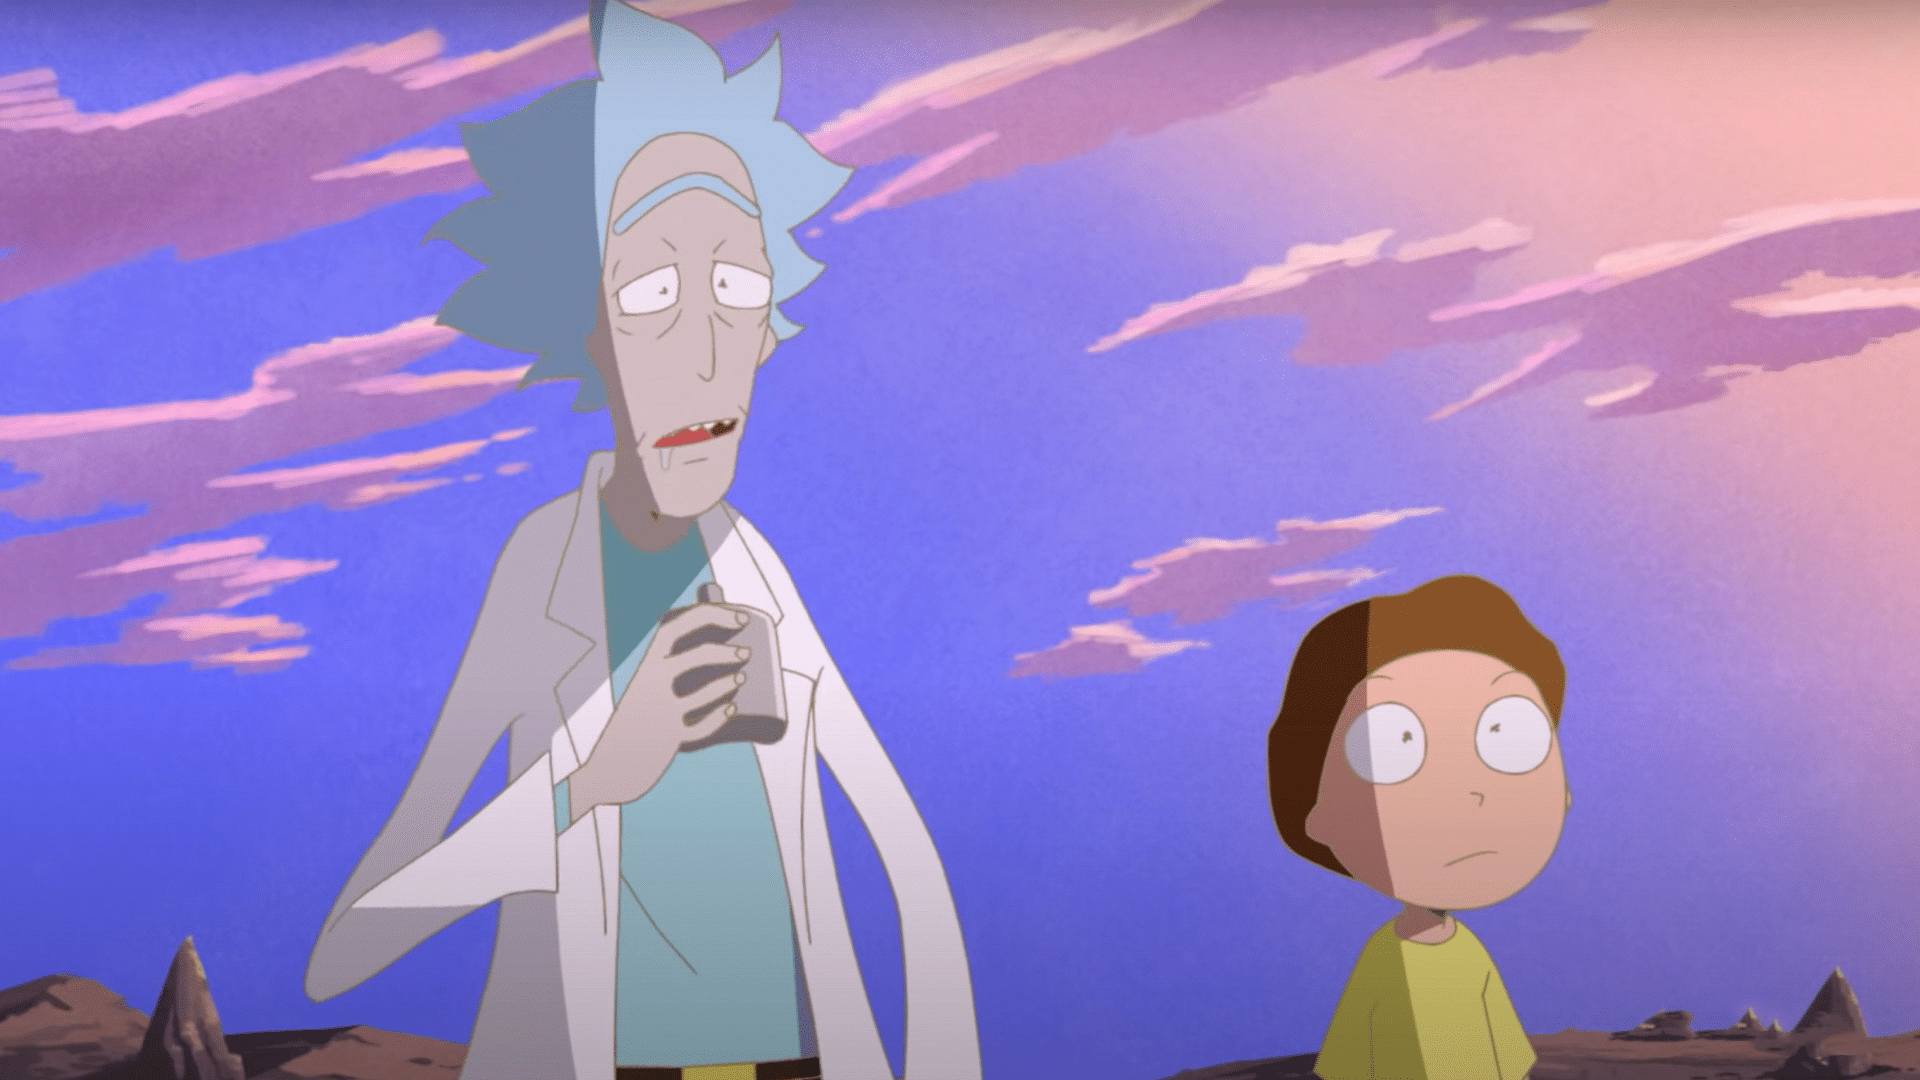 Rick & Morty